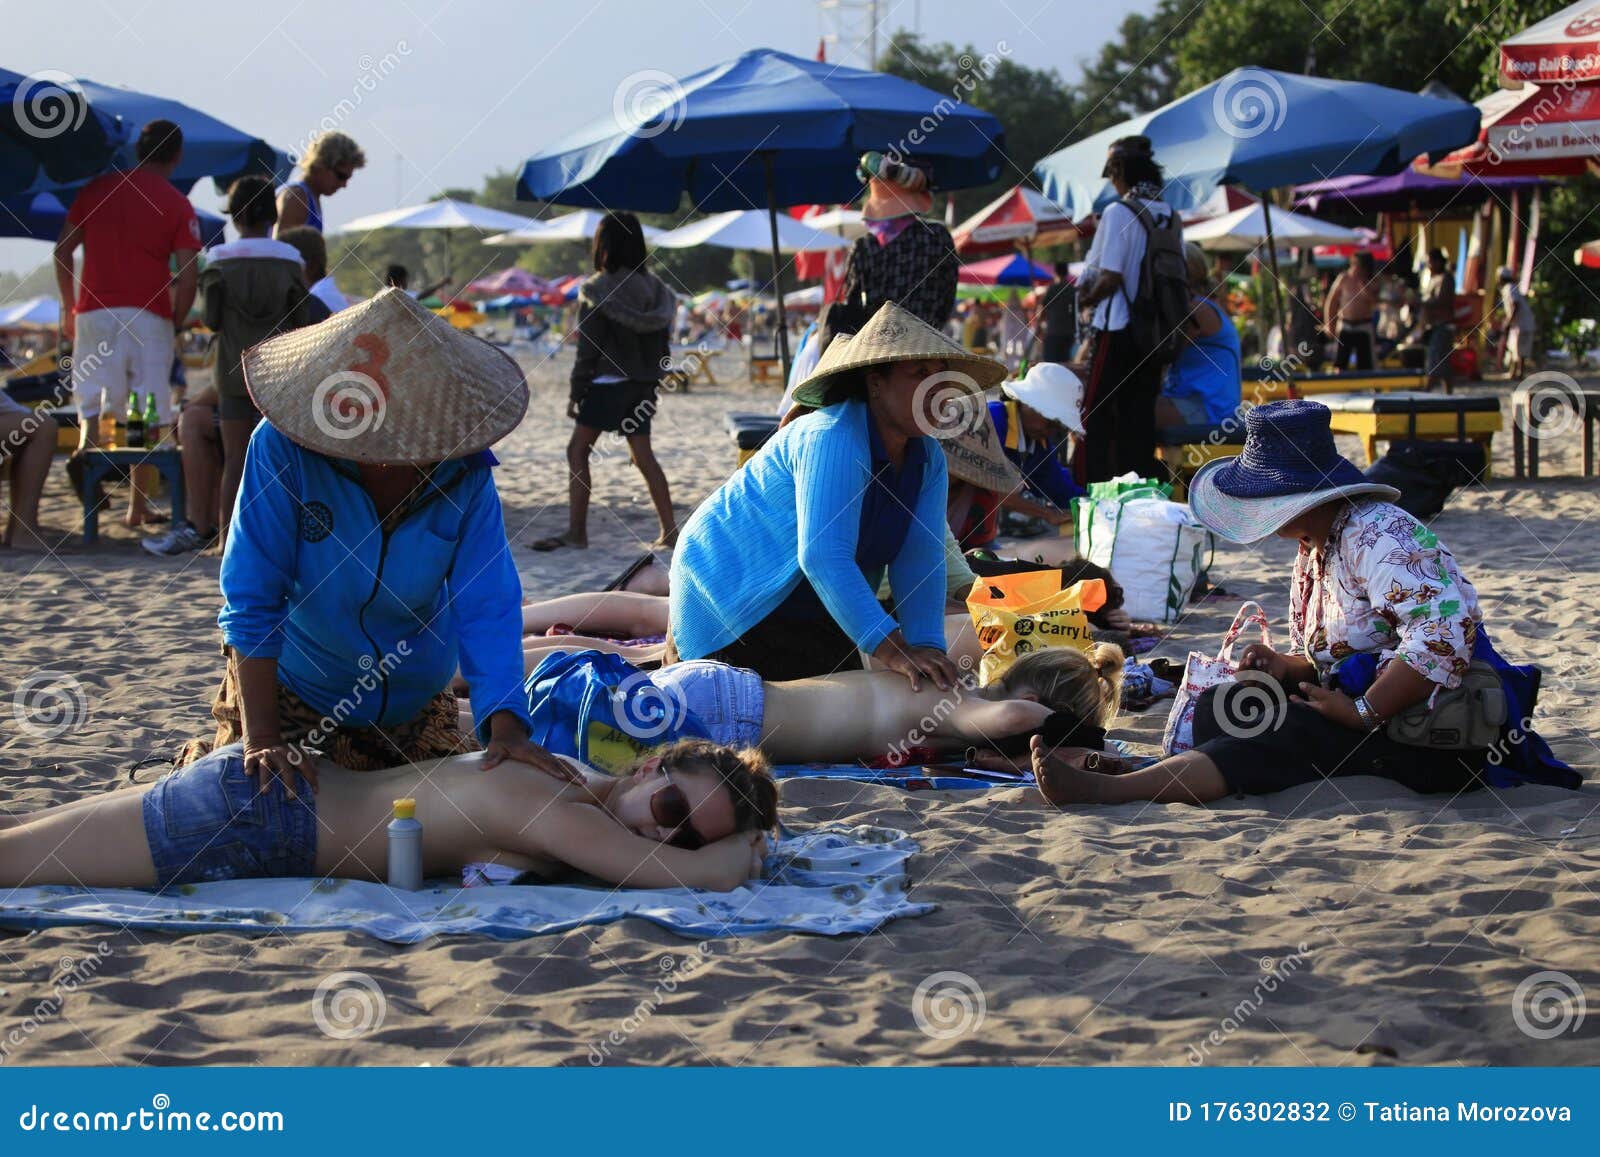 Indonesian Women Massage Girls To Tourists On The Beach On